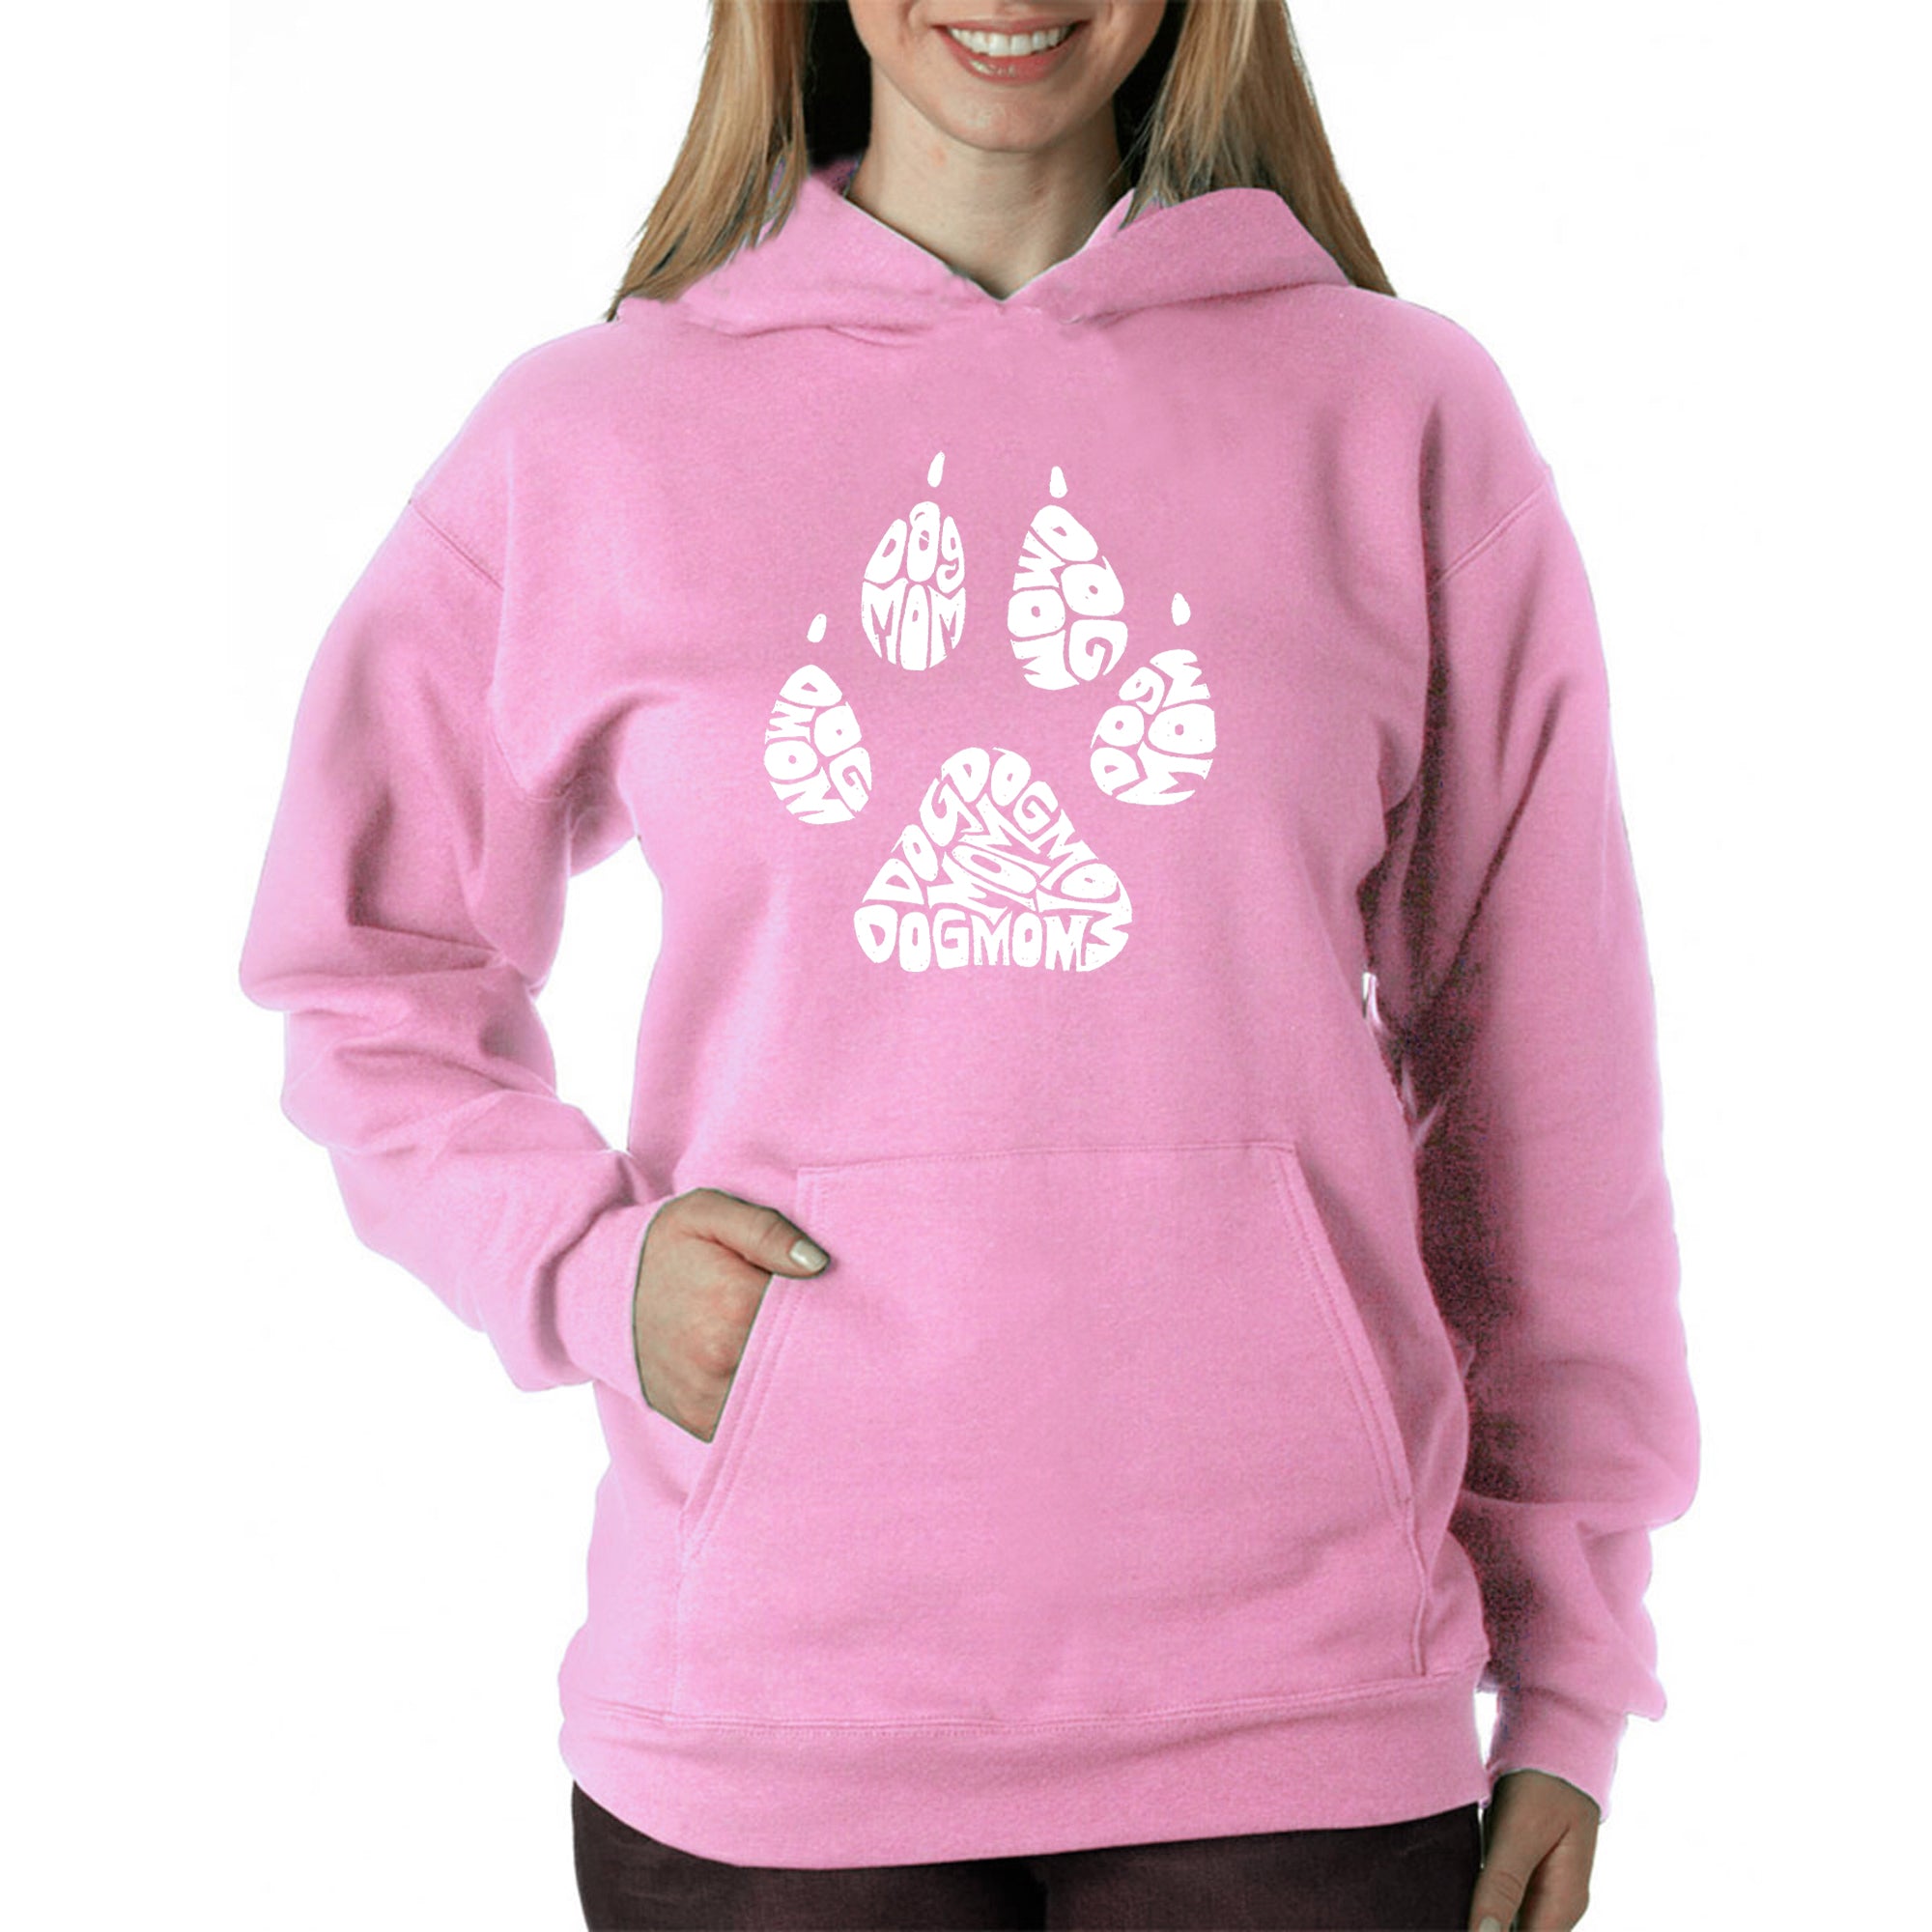 Dog Mom - Women's Word Art Hooded Sweatshirt - Pink - Large